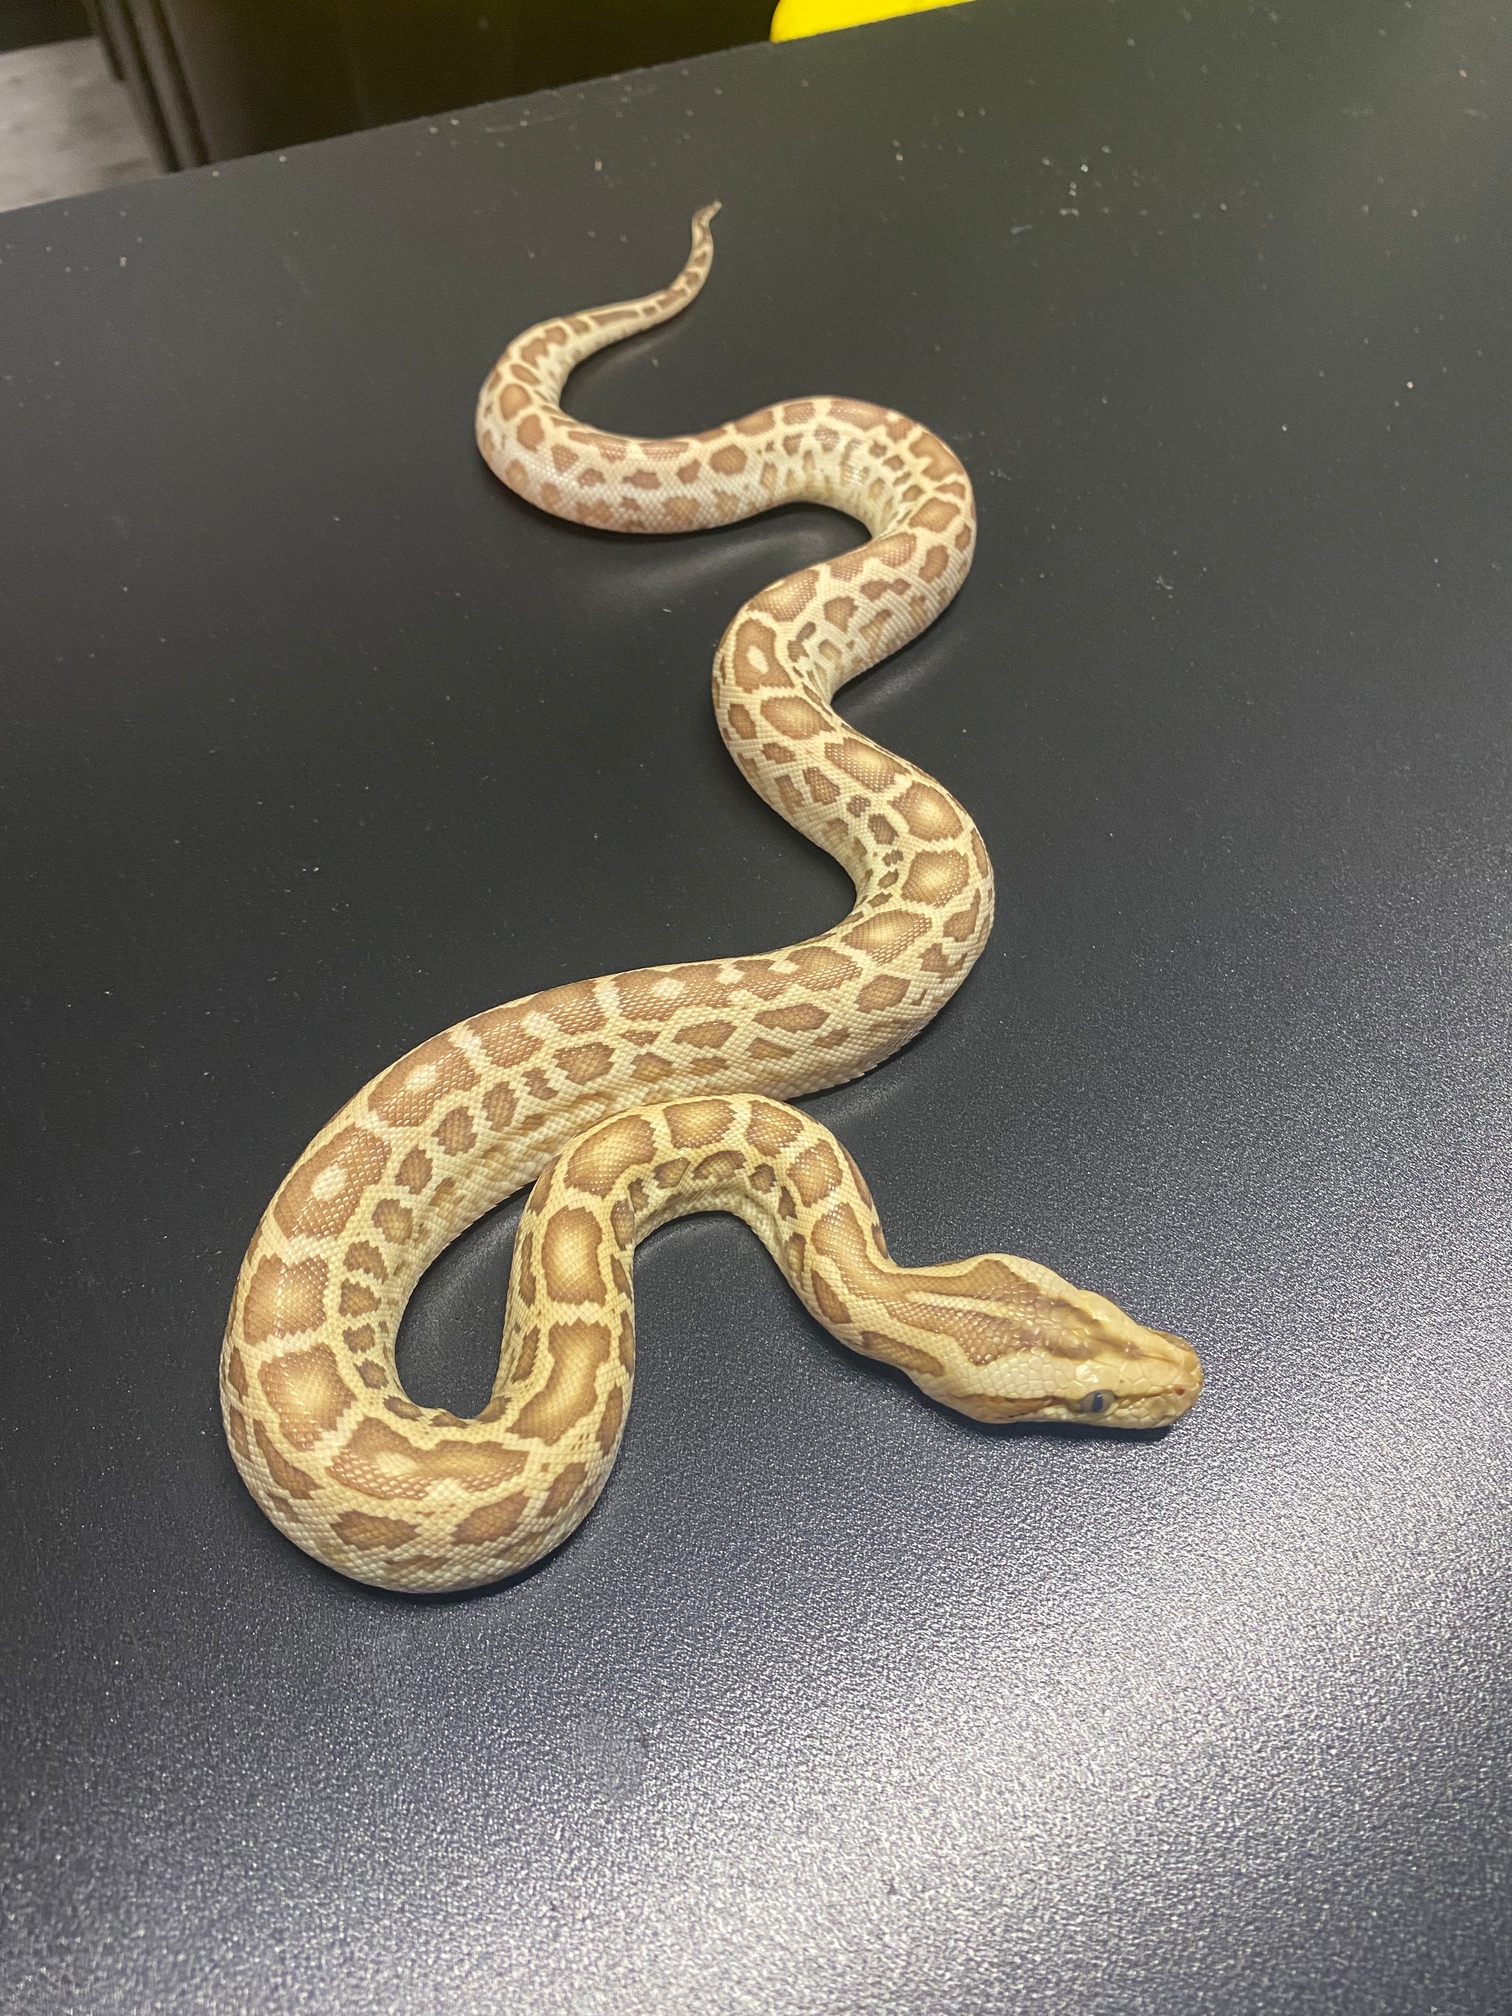 Hypo Burmese Python by Colossal Reptiles, LLC